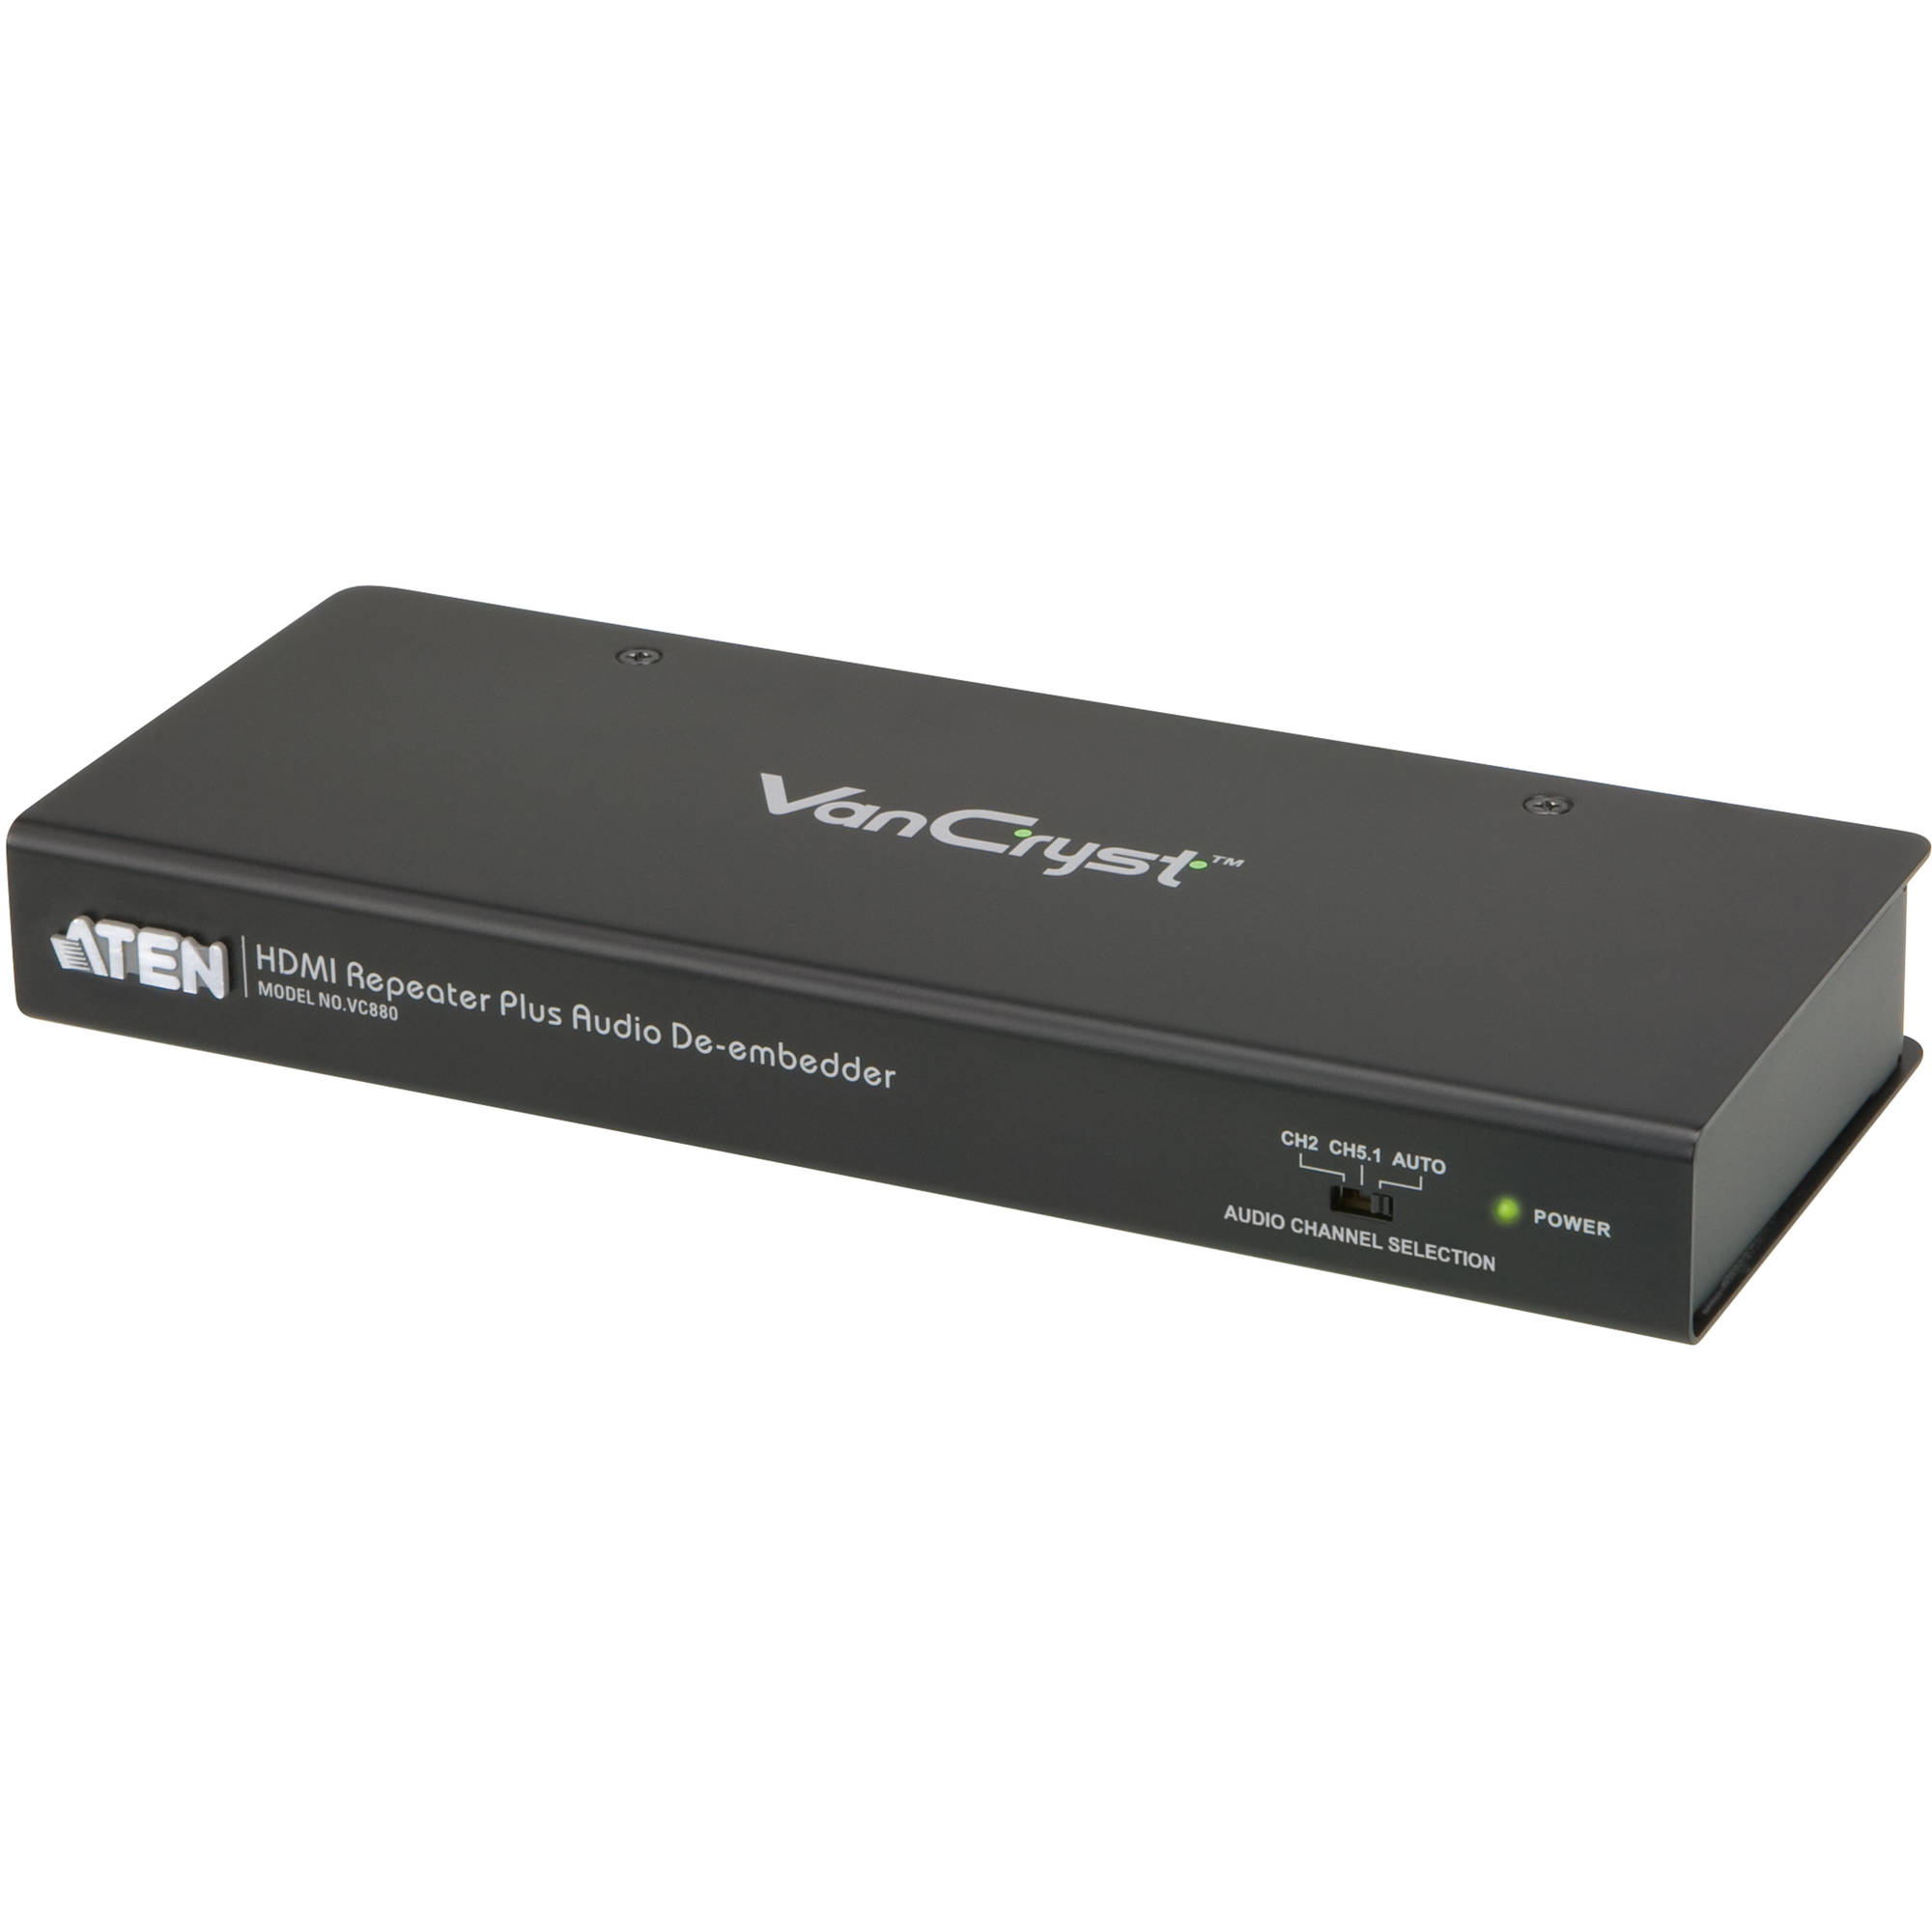 Усилитель сигнала HDMI Aten VC880-AT-G